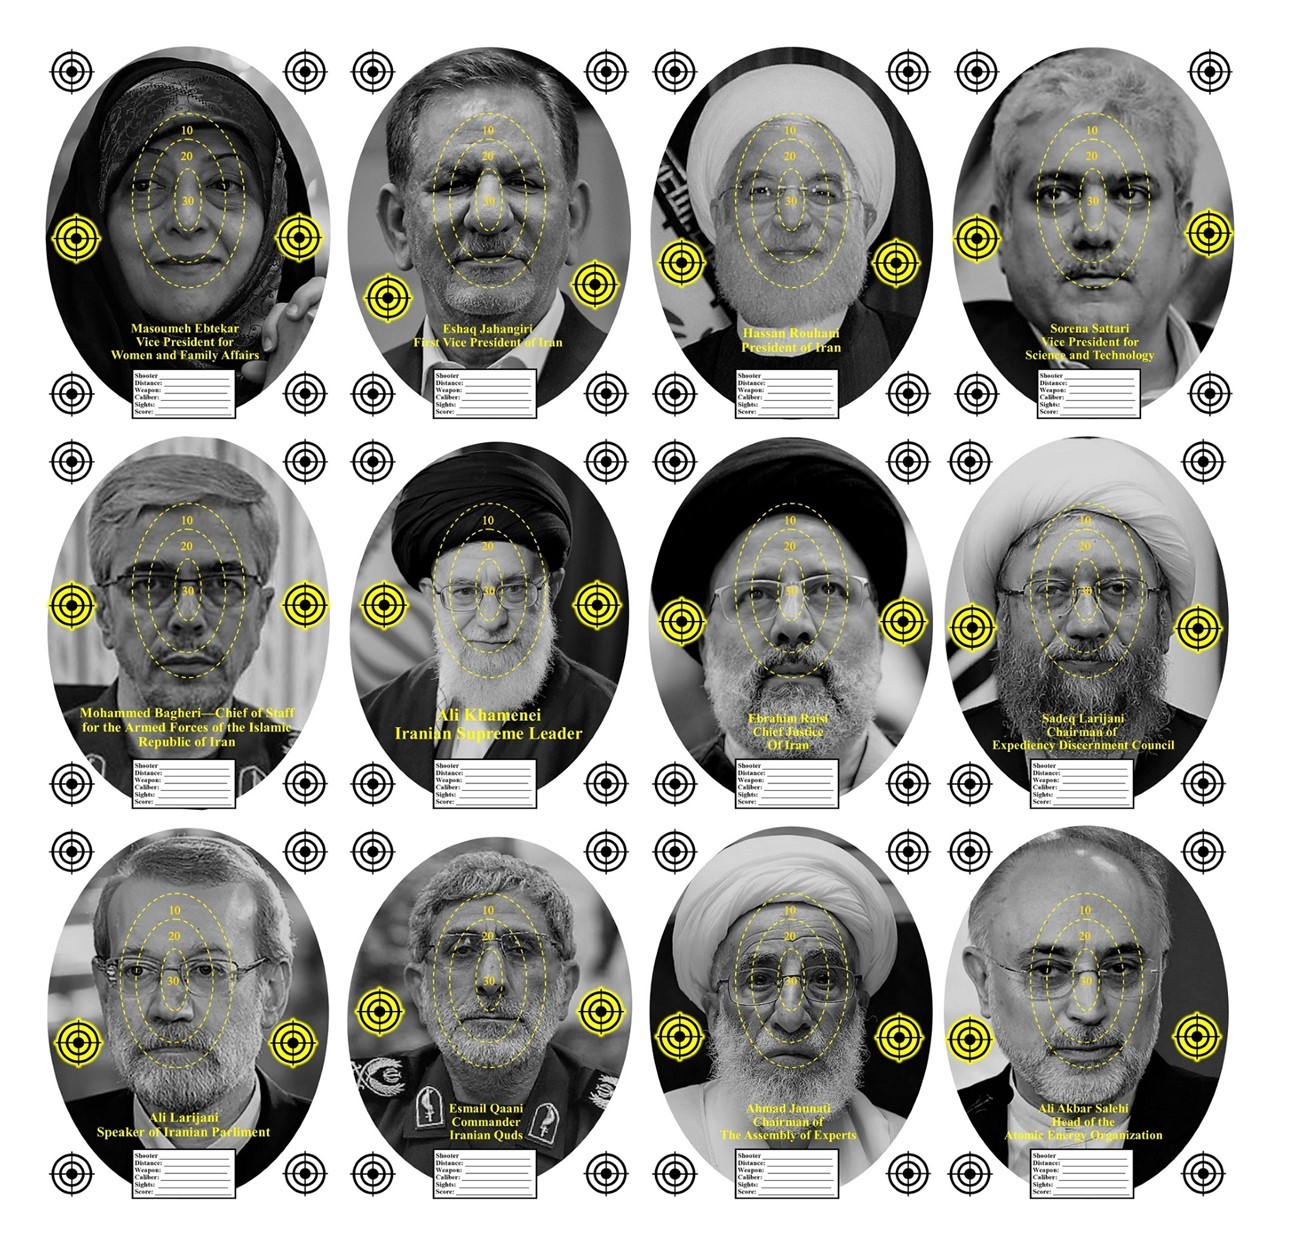 Iranian Terrorist Targets.jpg